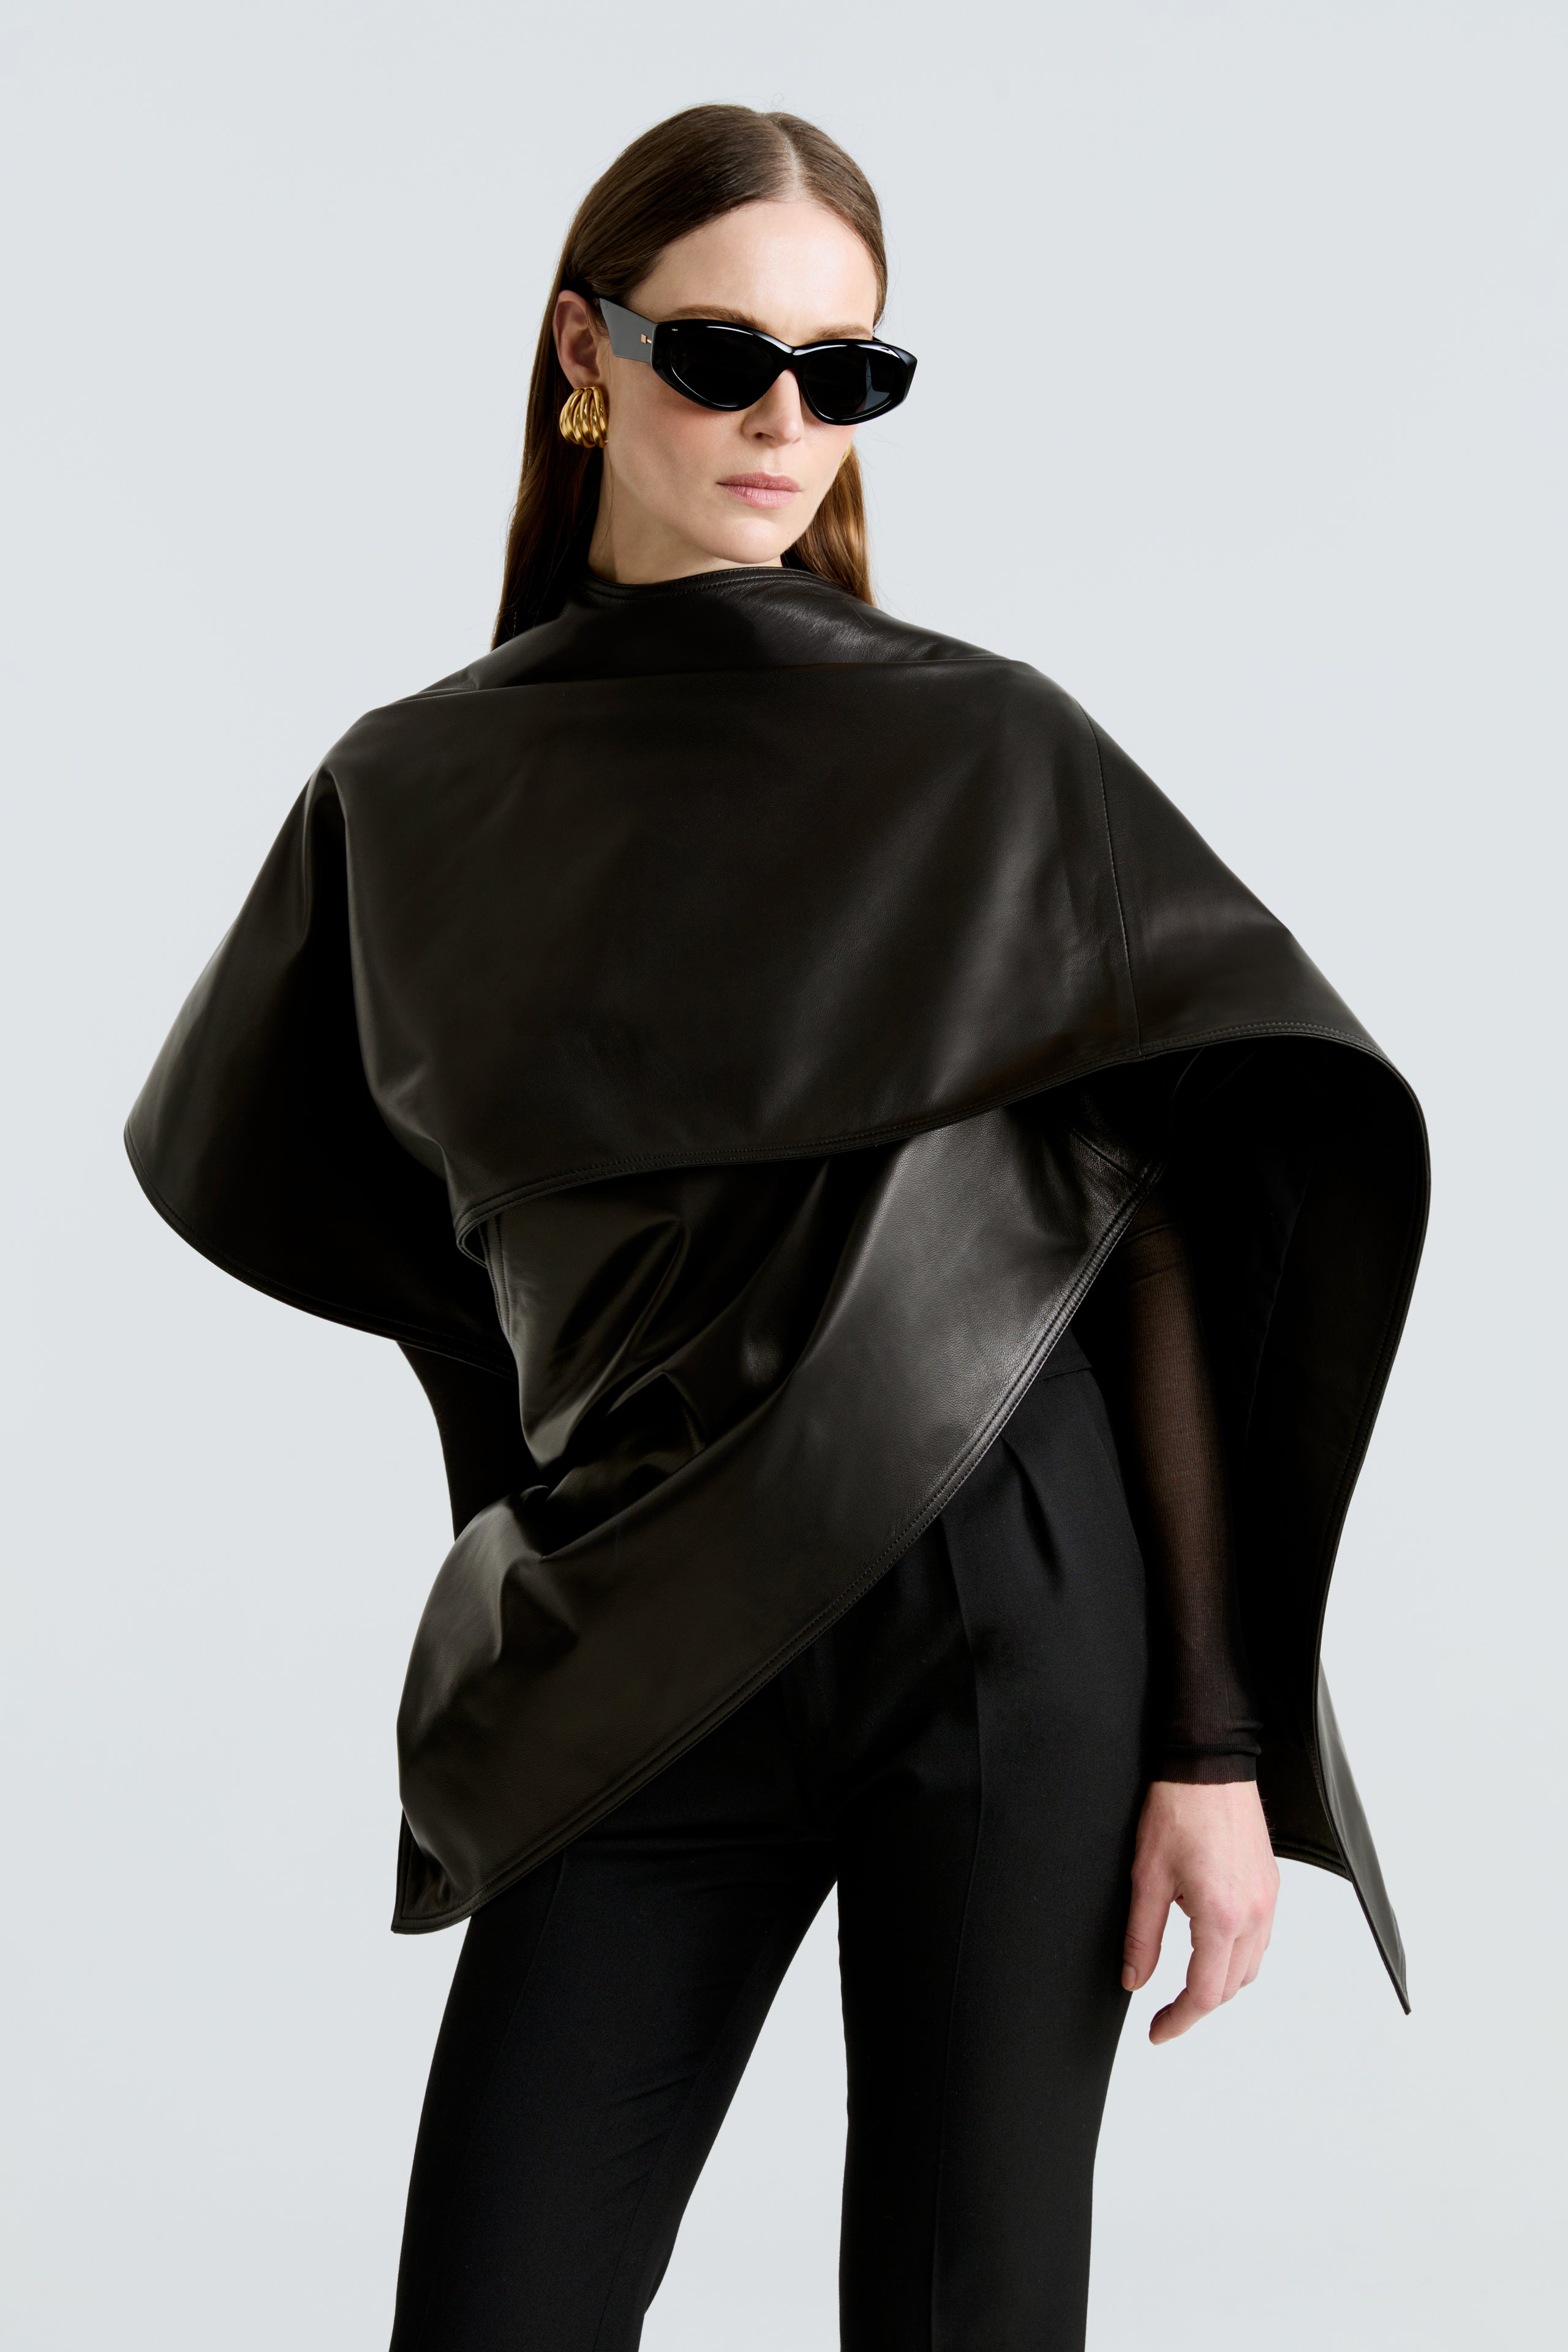 Model is wearing the Edra Black Sleek Leather Cape Close Up